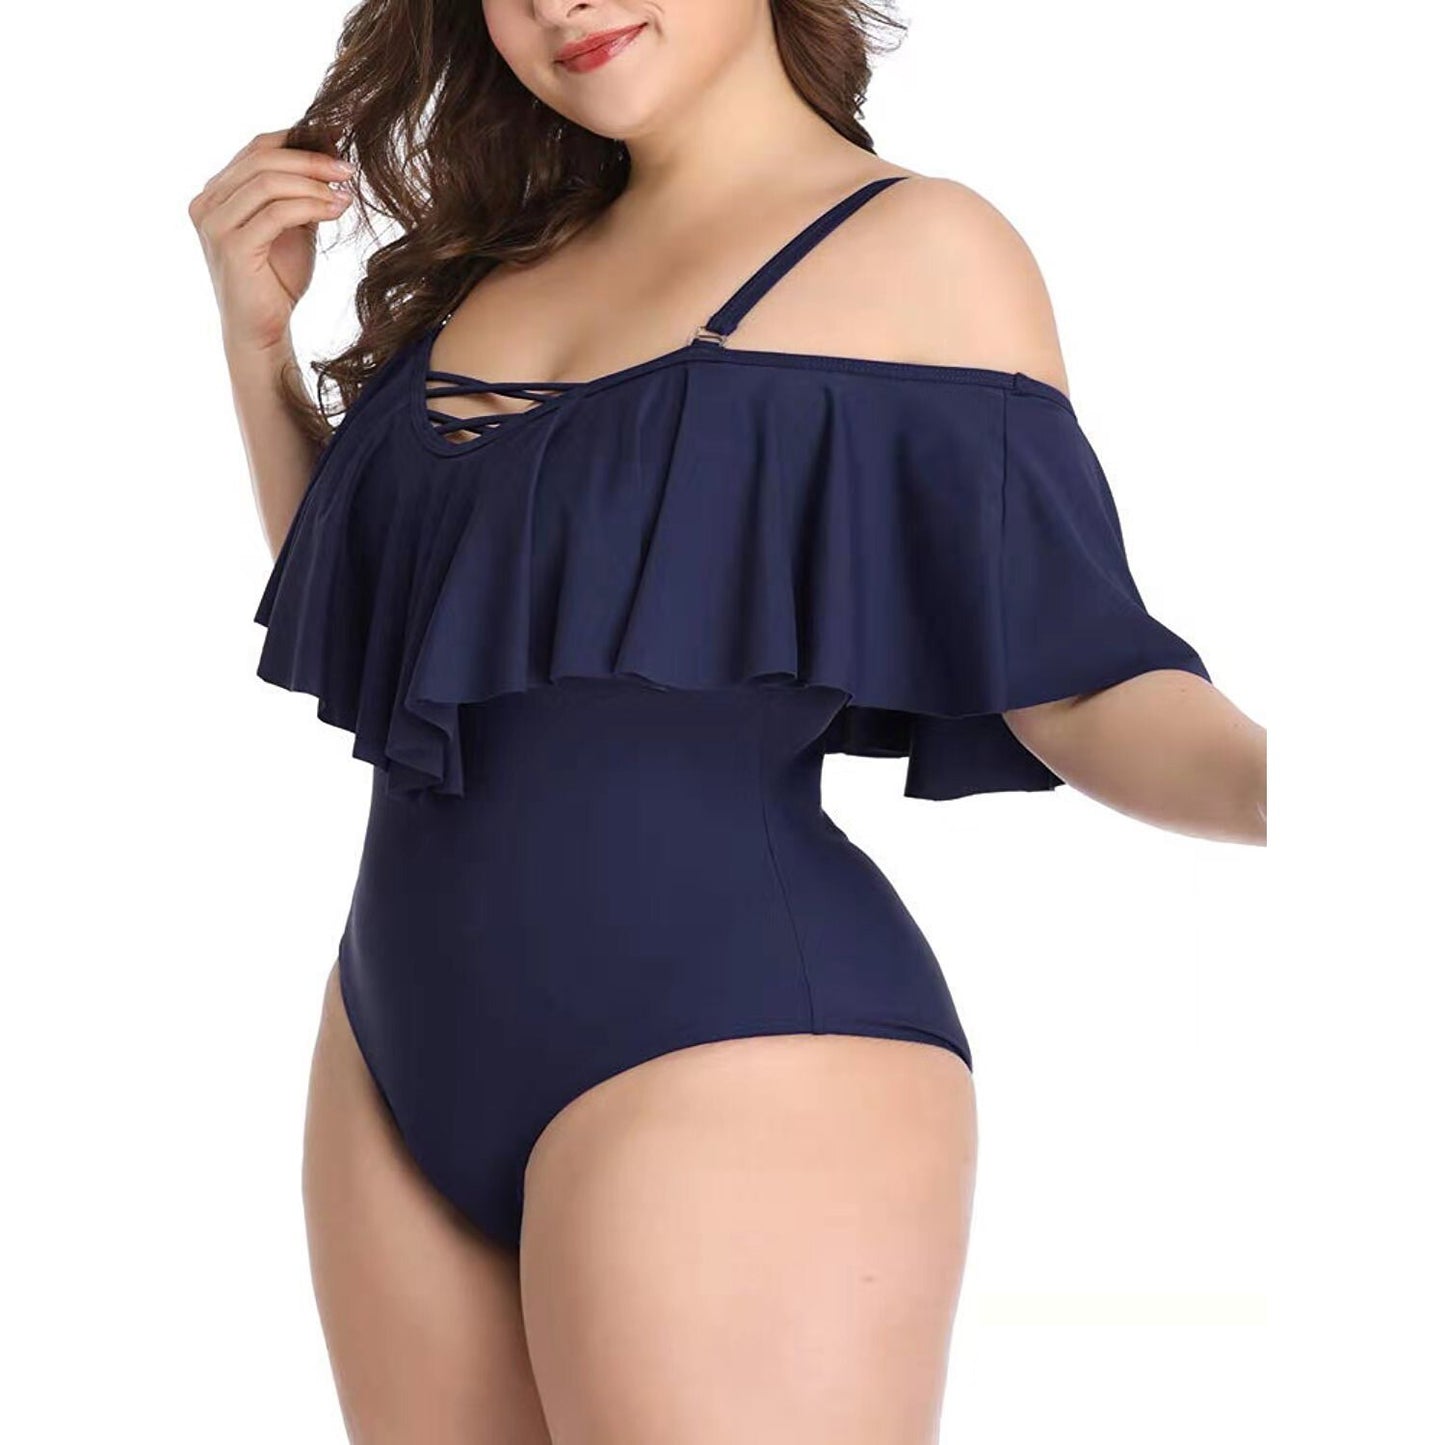 Solid Bikini Lotus Leaf Women Plus Size Swimsuit One Piece Swimwear Swimming Beach Buy A Bikini Get A Silk Scarf Randomly